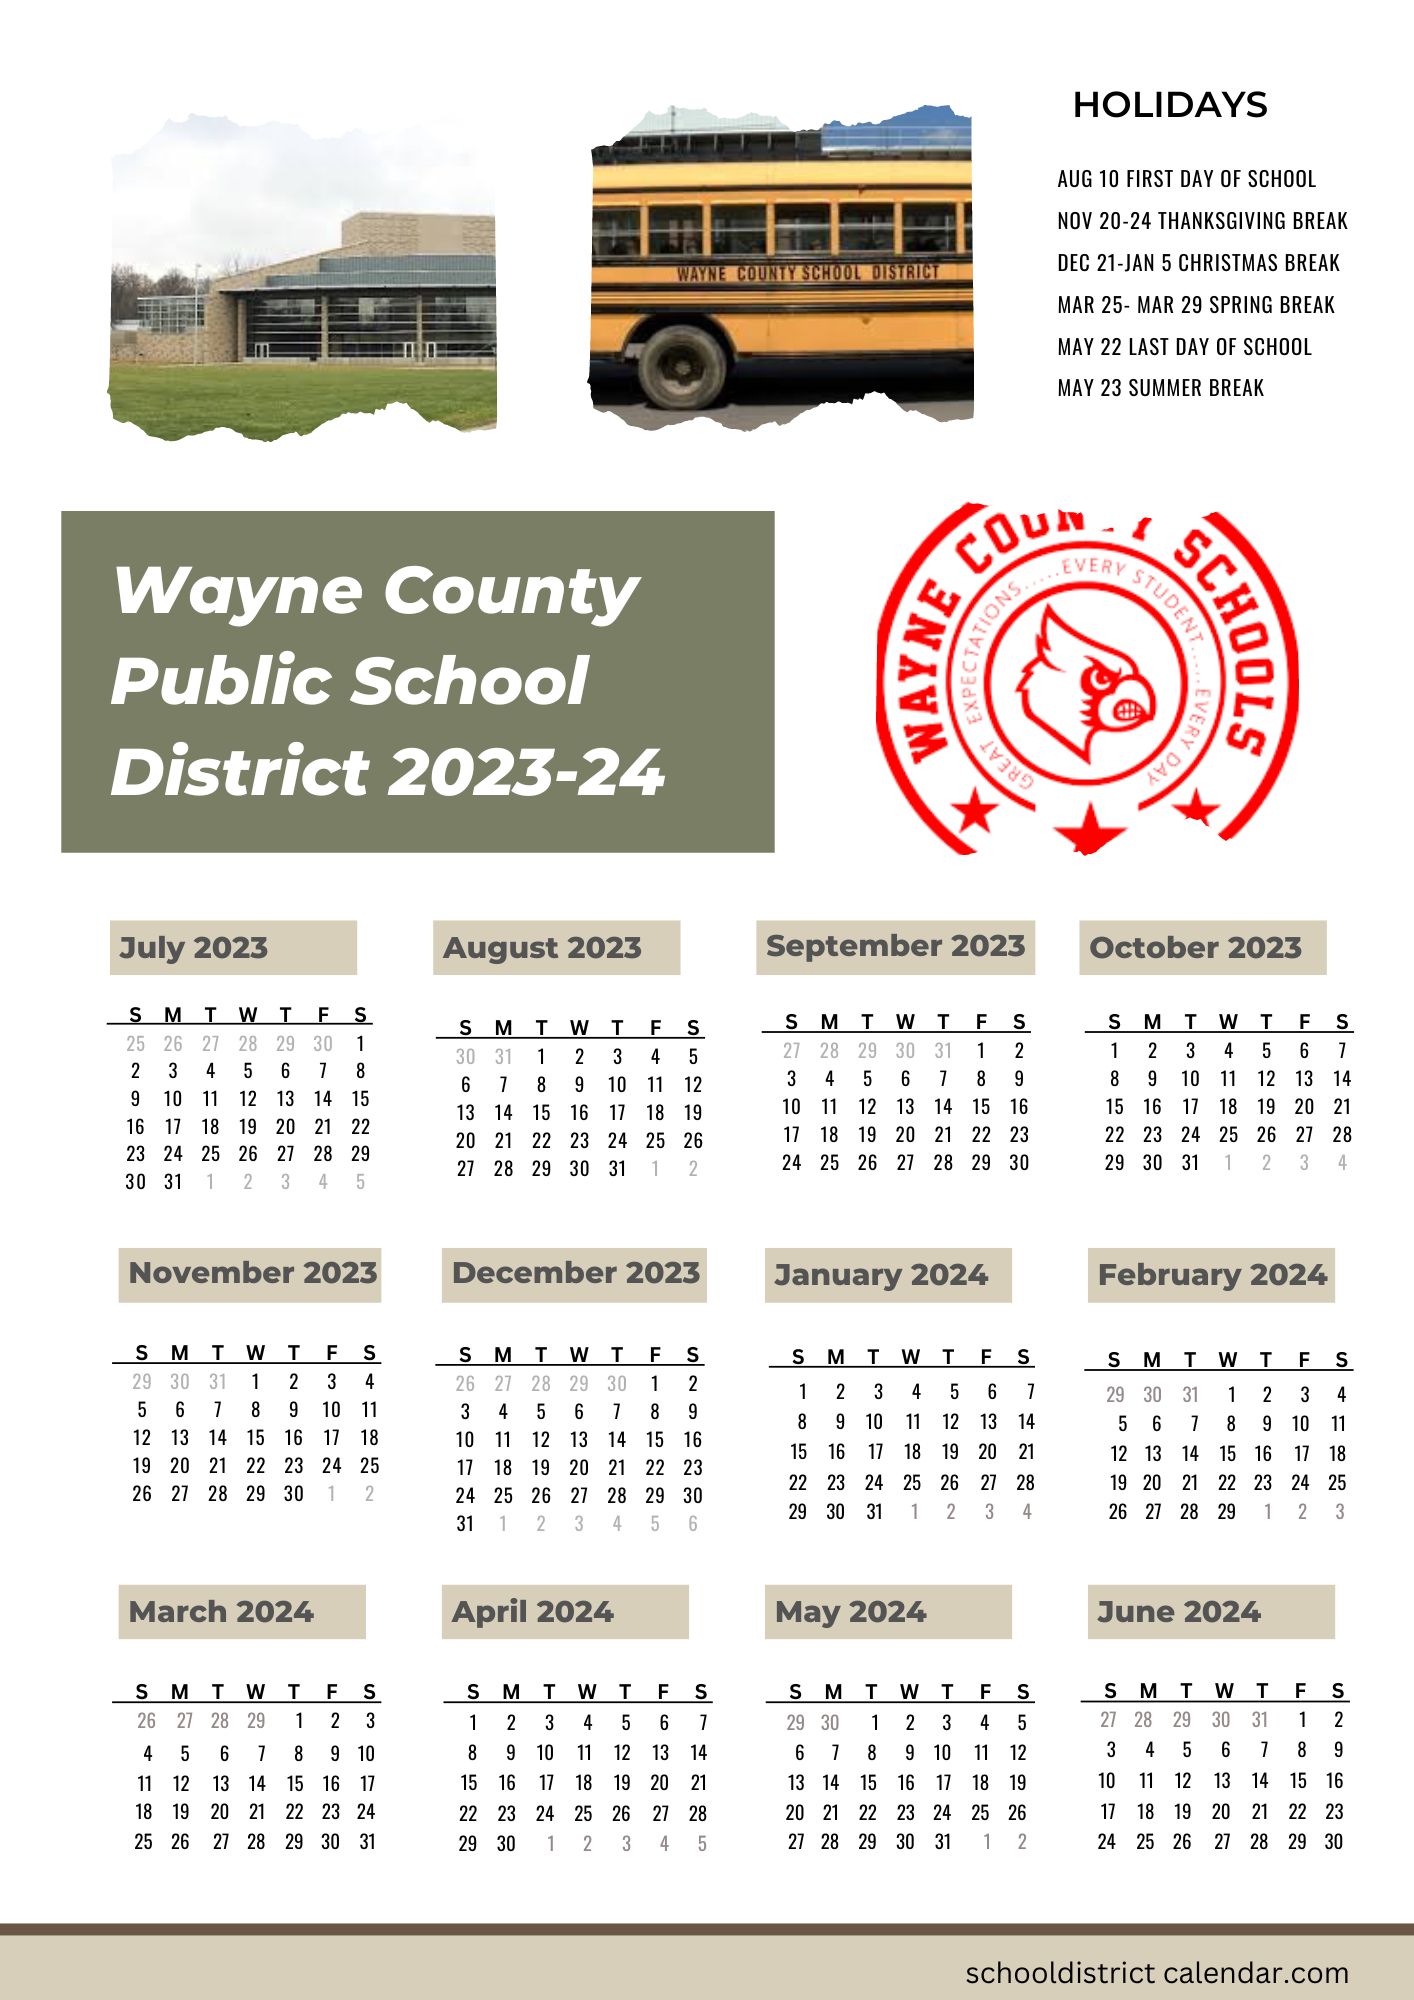 Wayne County Public Schools District Calendar Holidays 202324